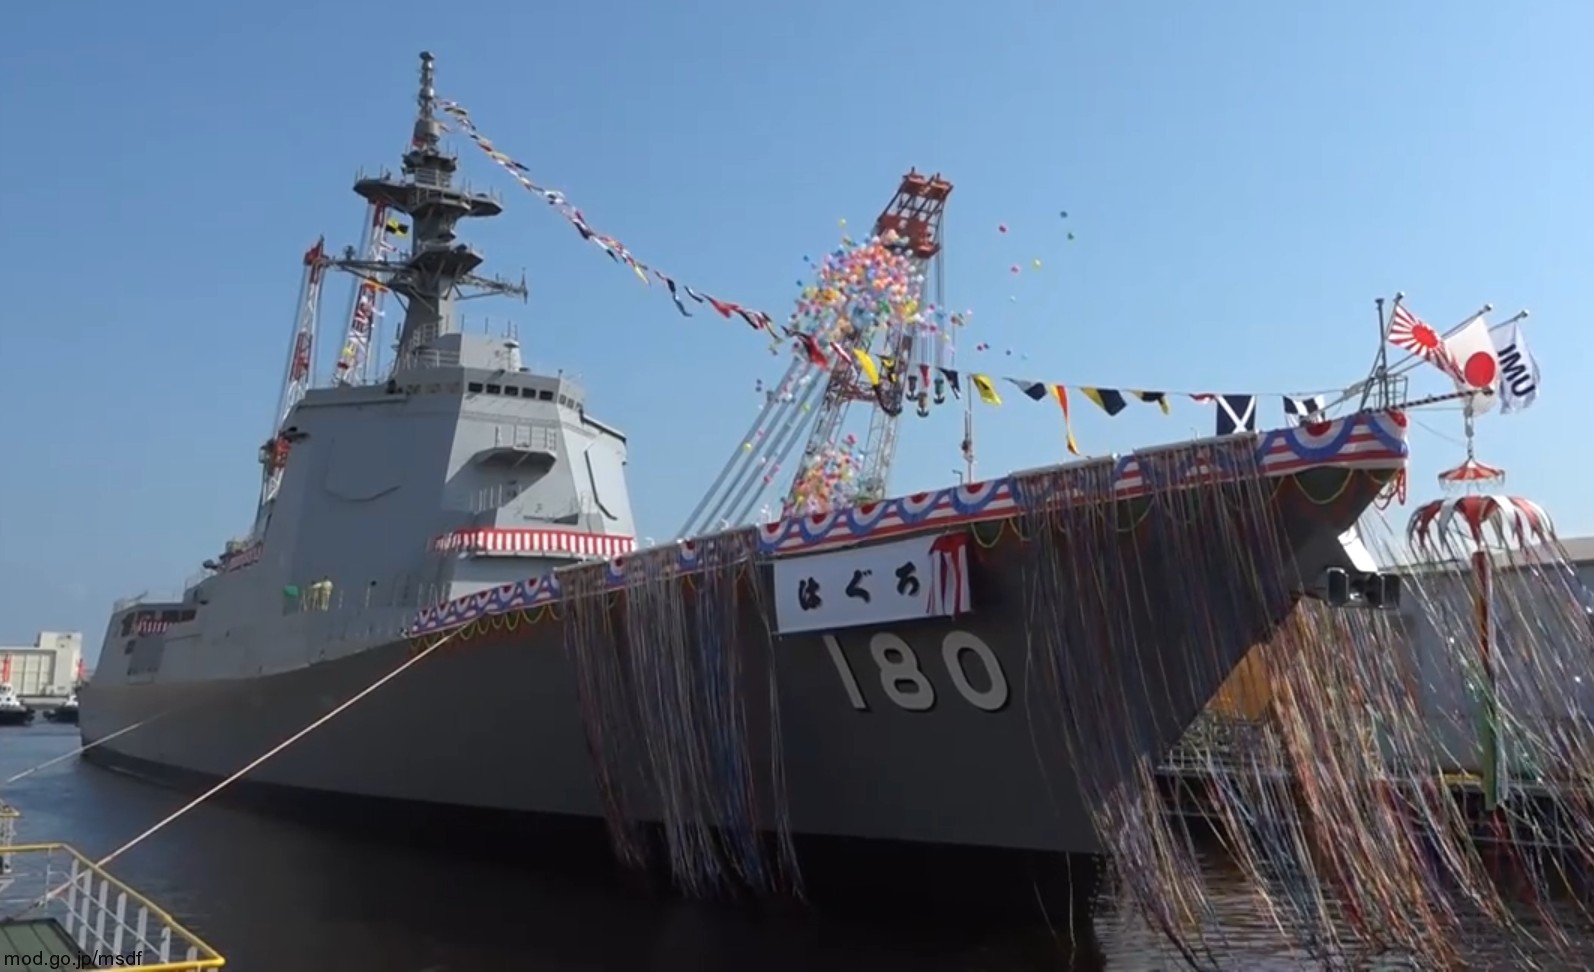 ddg-180 js haguro maya 27dd class guided missile destroyer aegis japan maritime self defense force jmsdf 04